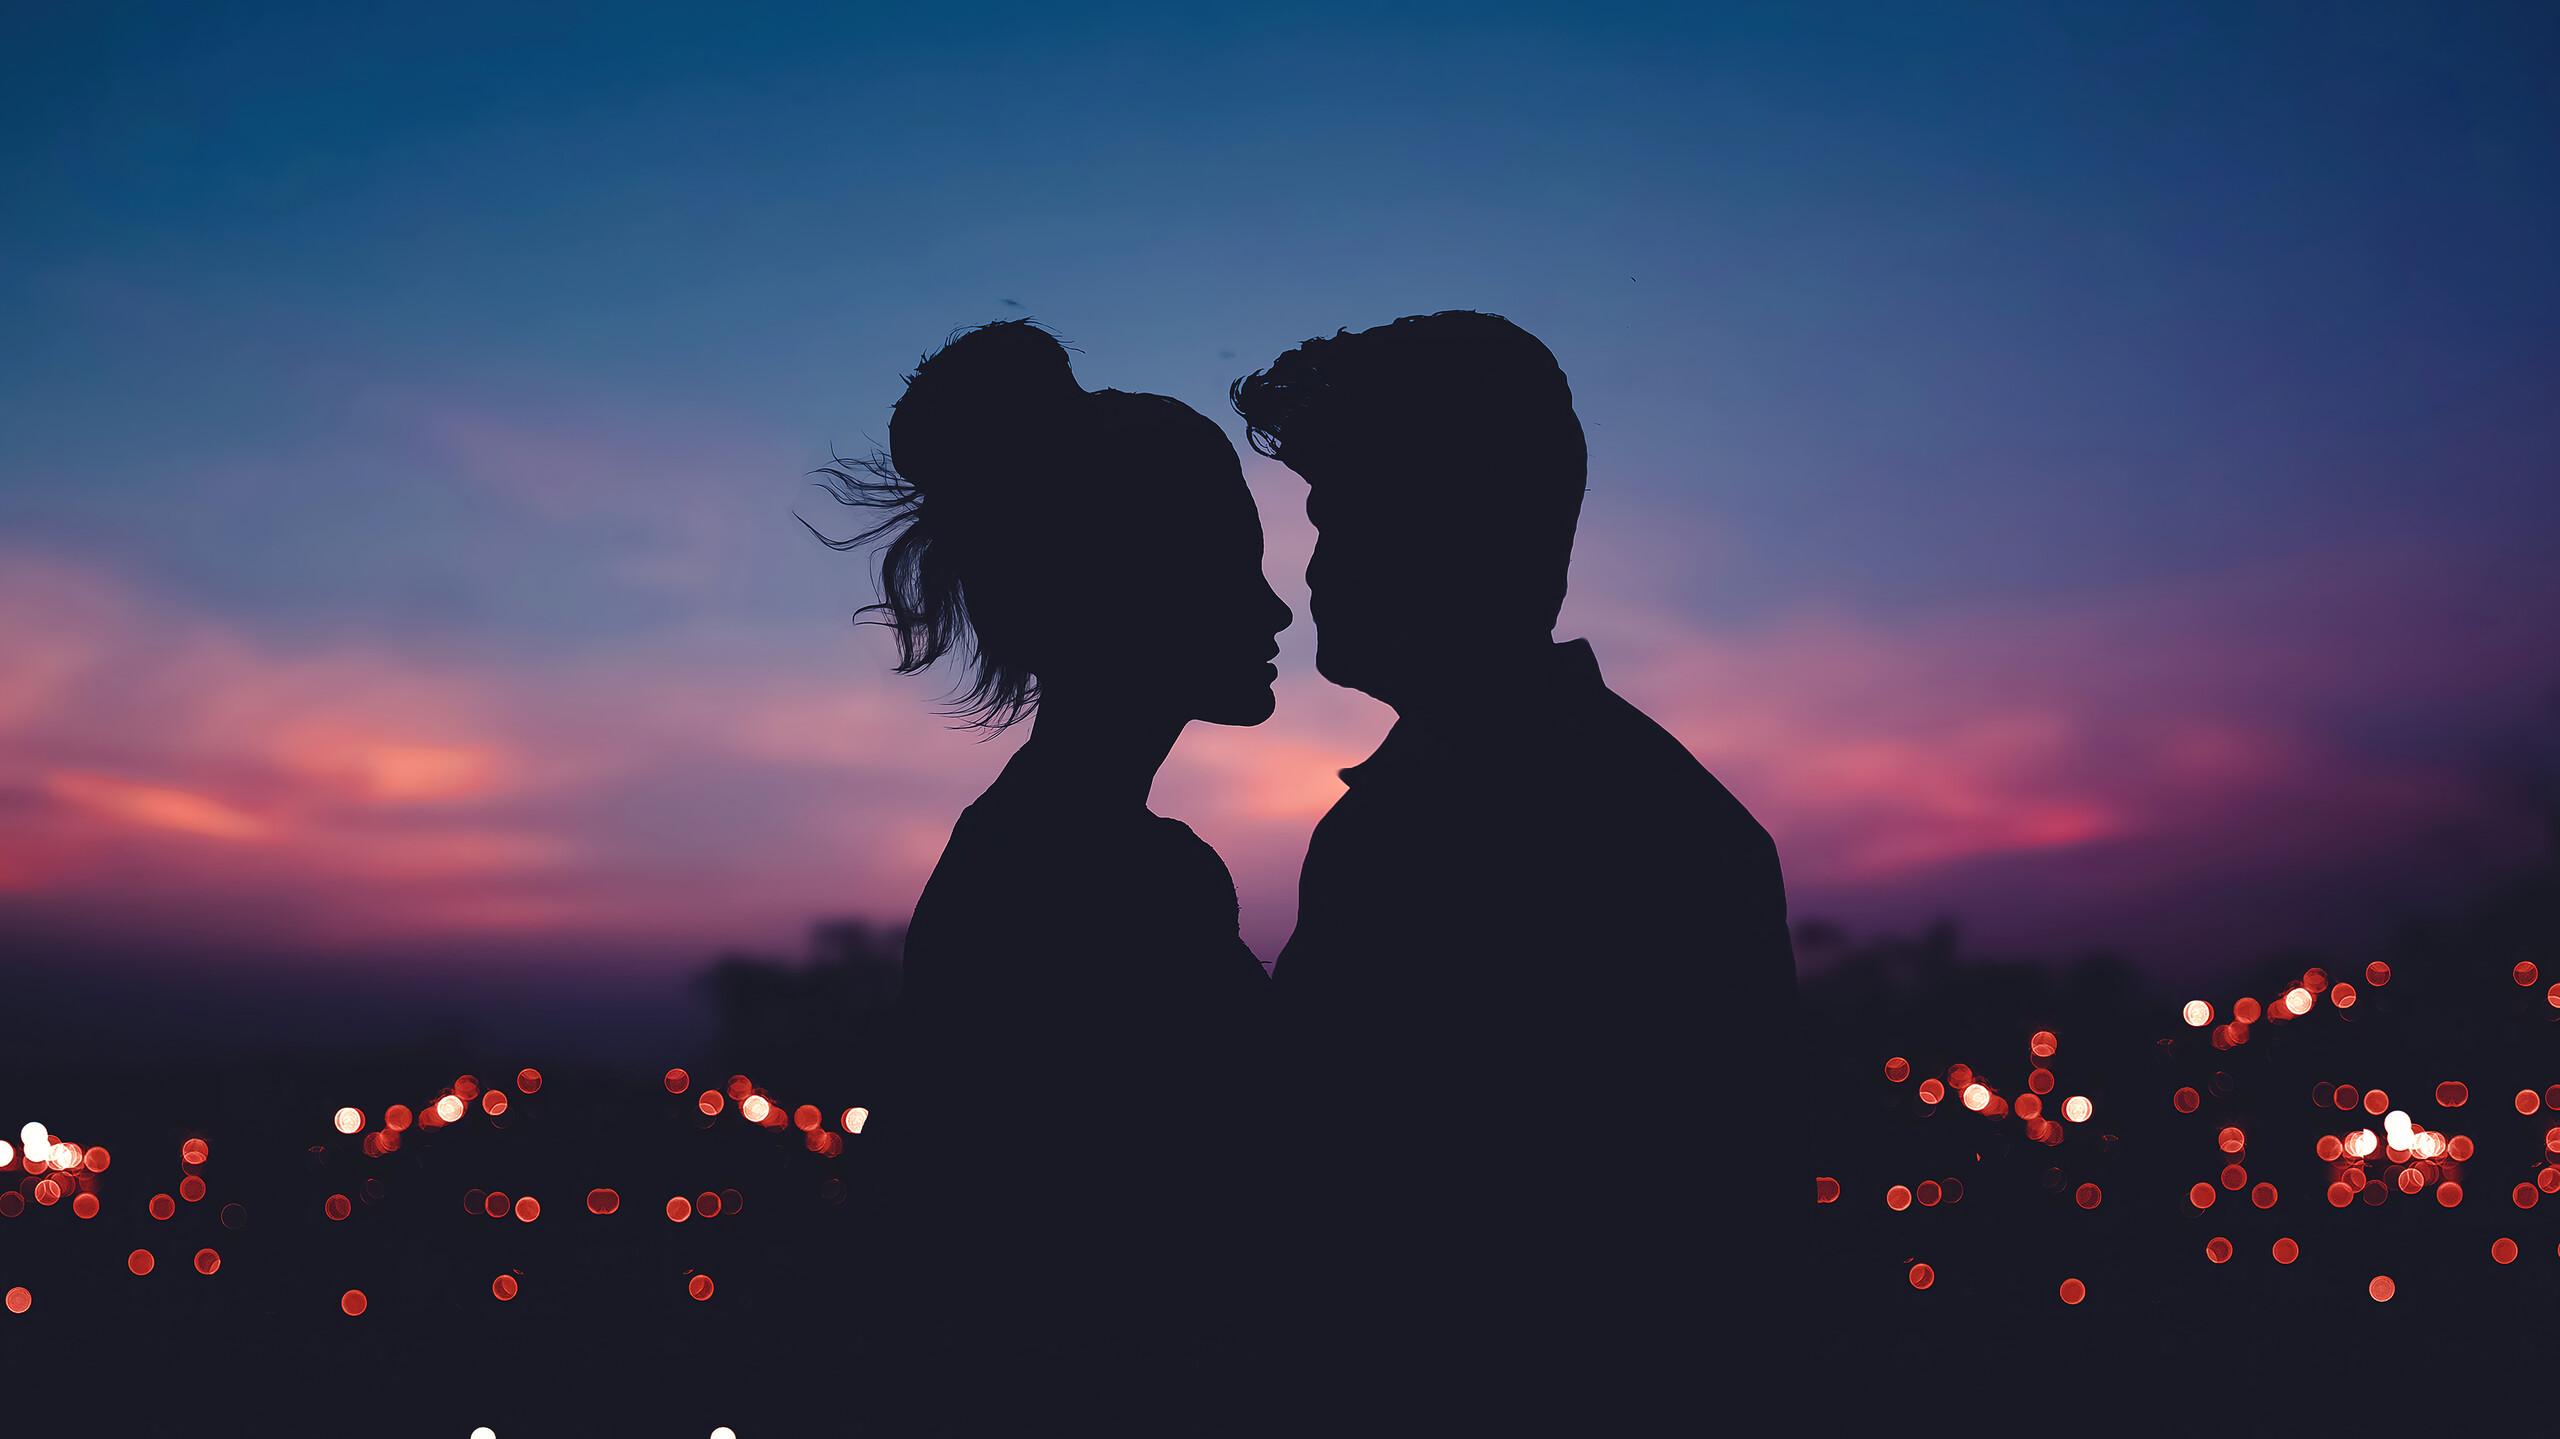 Romantic Couple Silhouette Lovers Sky Scenery 4k Wallpaper iPhone